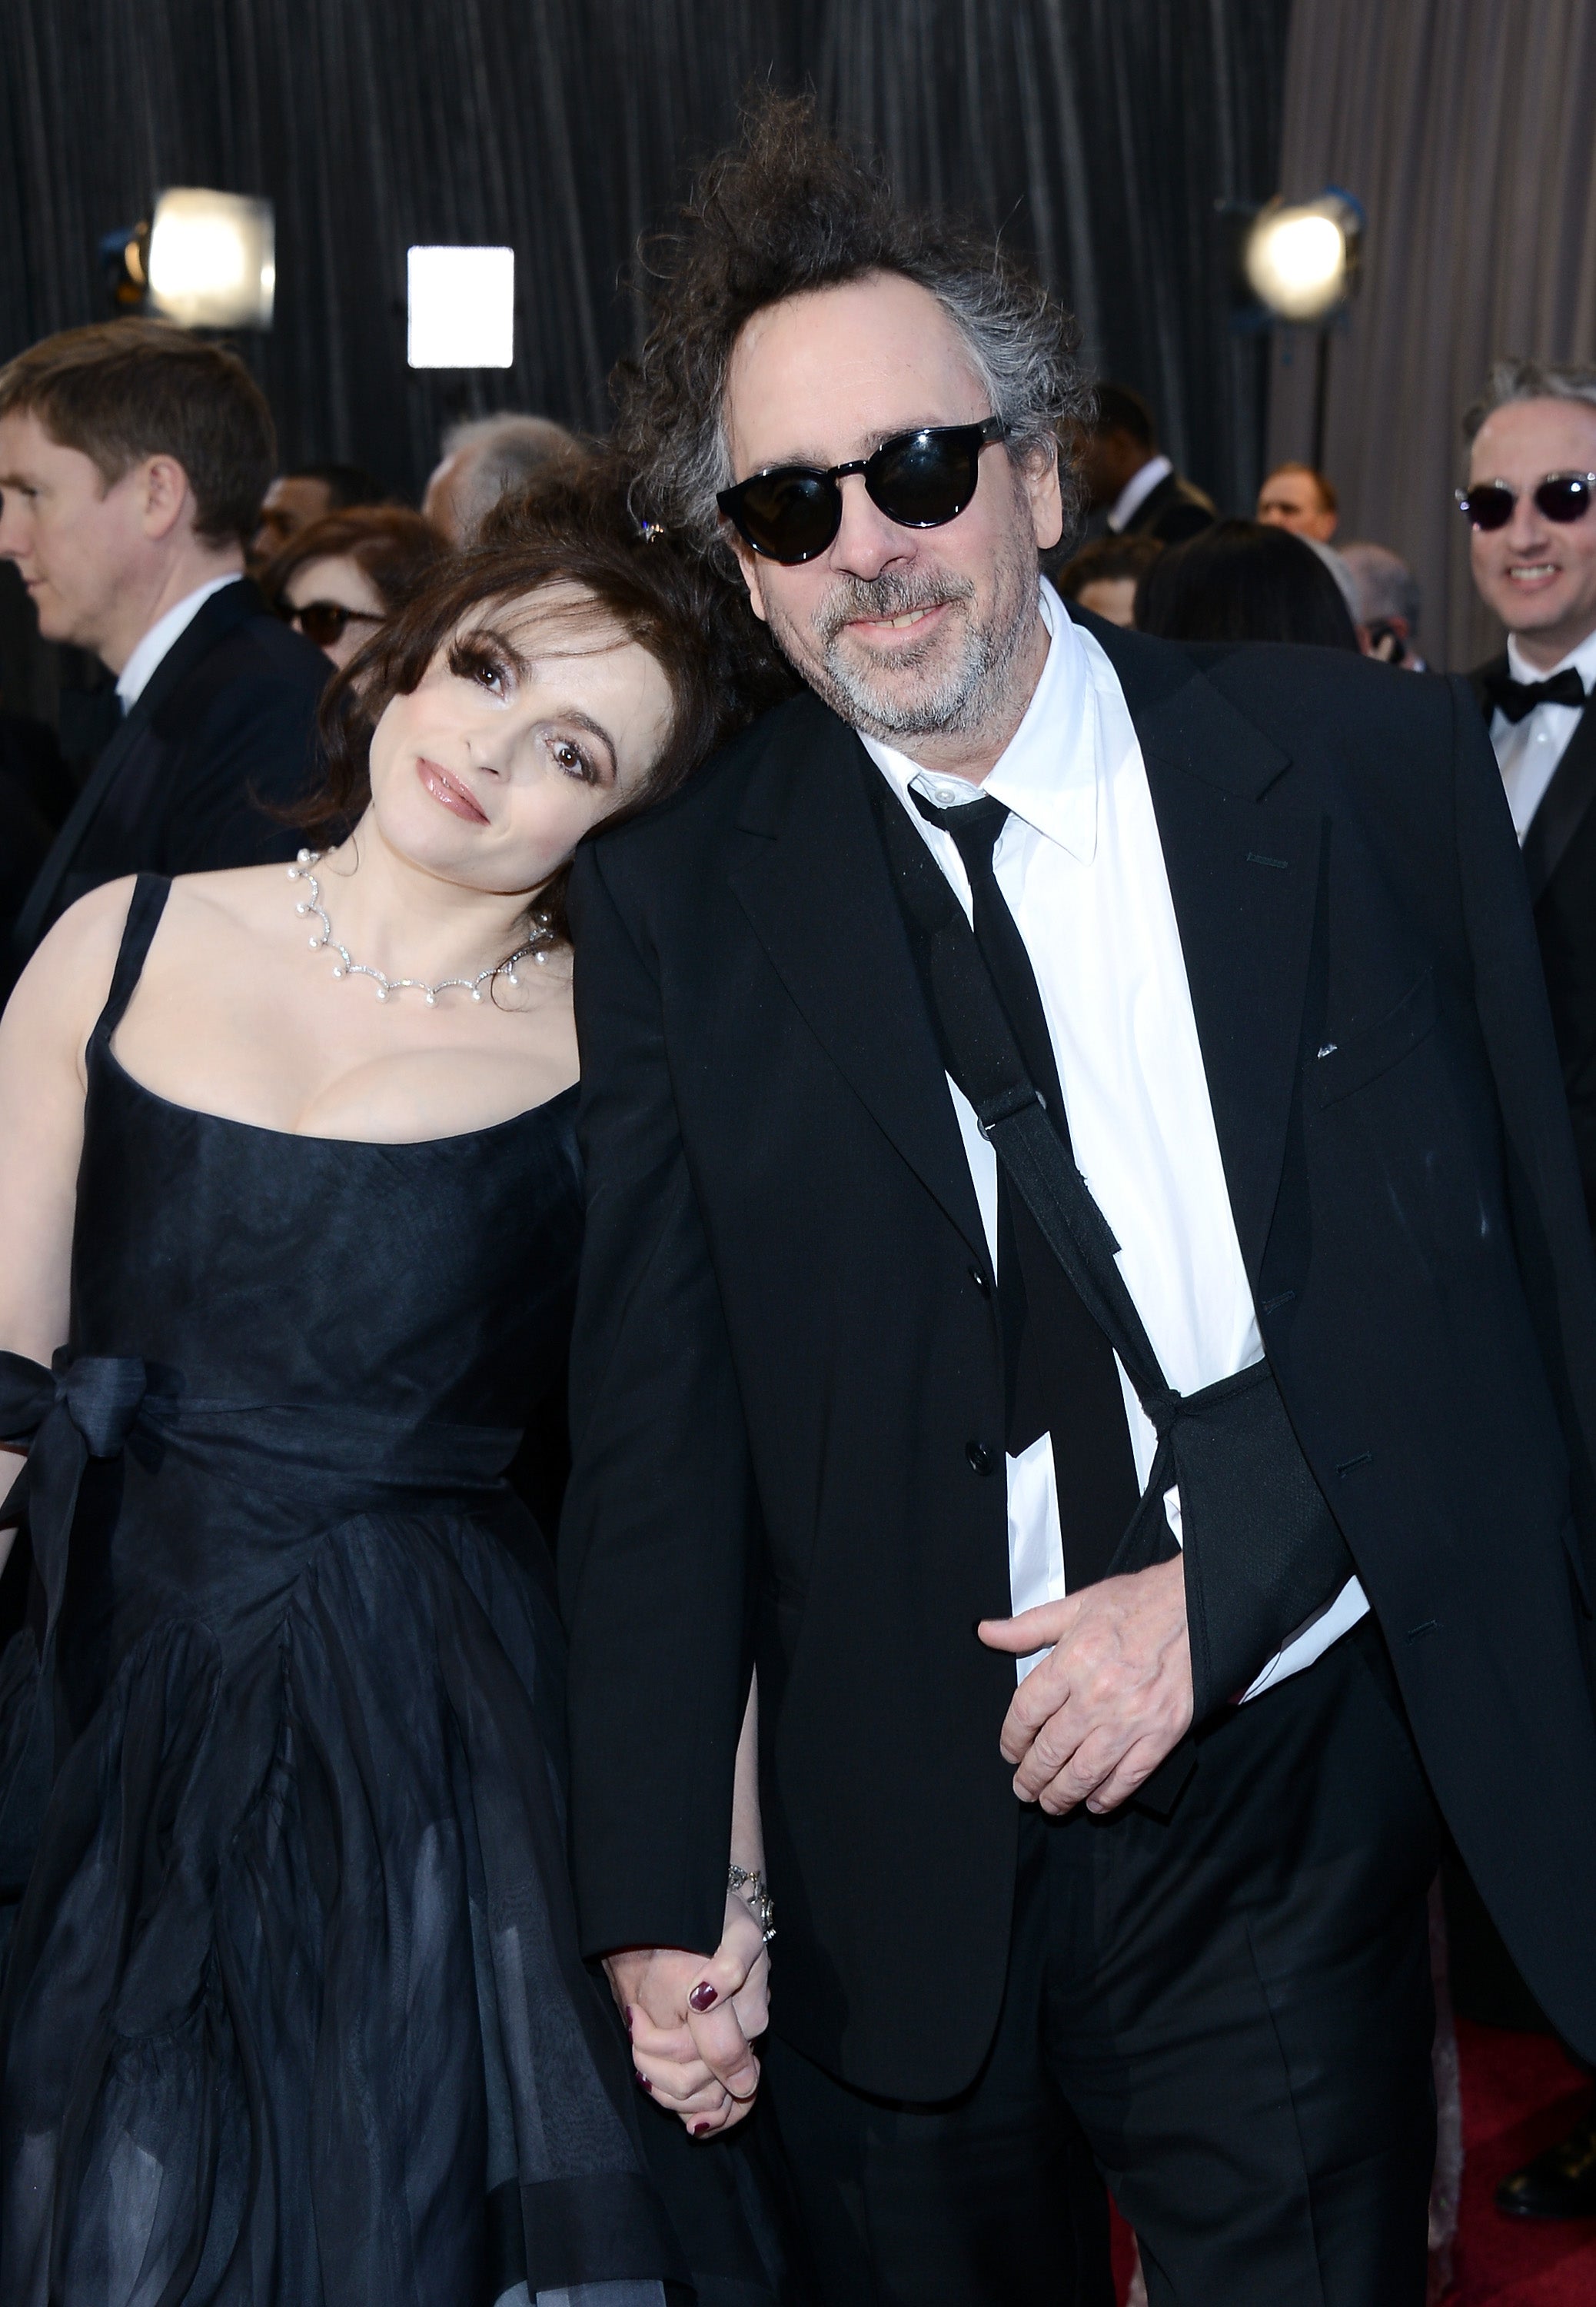 Filmmaker Tim Burton and actress Helena Bonham Carter arrive at the Oscars at Hollywood & Highland Center on February 24, 2013